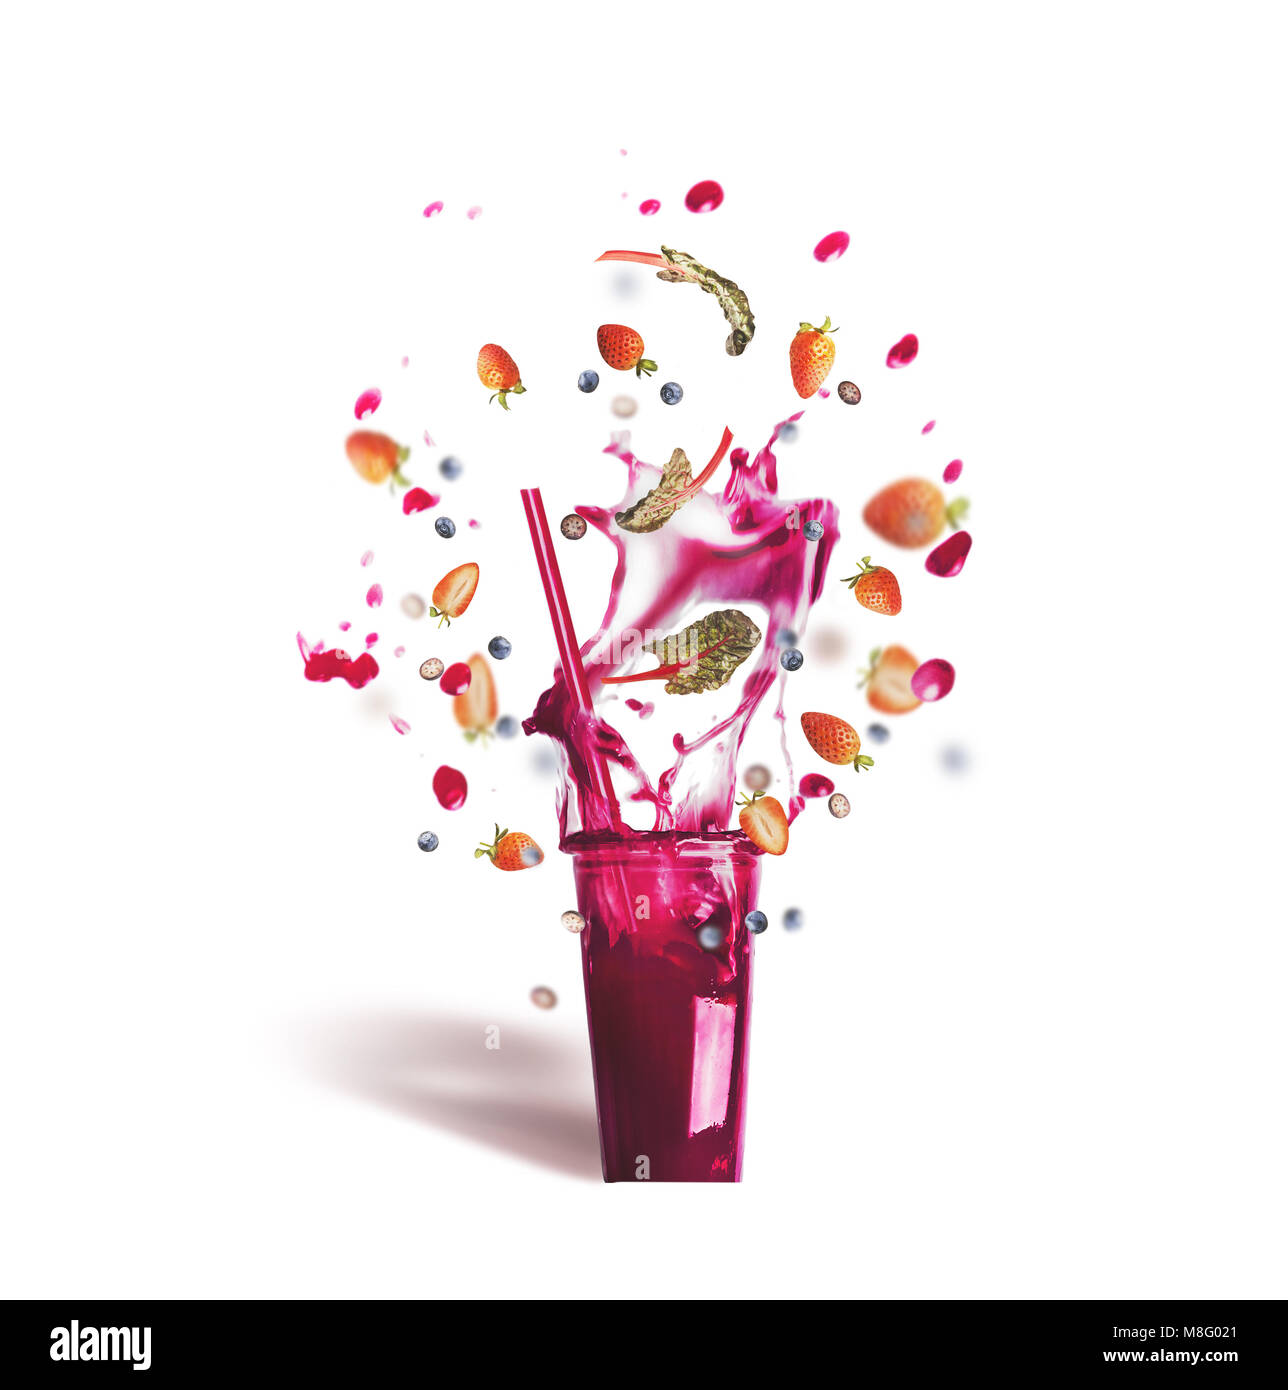 https://c8.alamy.com/comp/M8G021/glass-with-drinking-straw-and-pink-purple-splash-summer-beverage-smoothie-M8G021.jpg